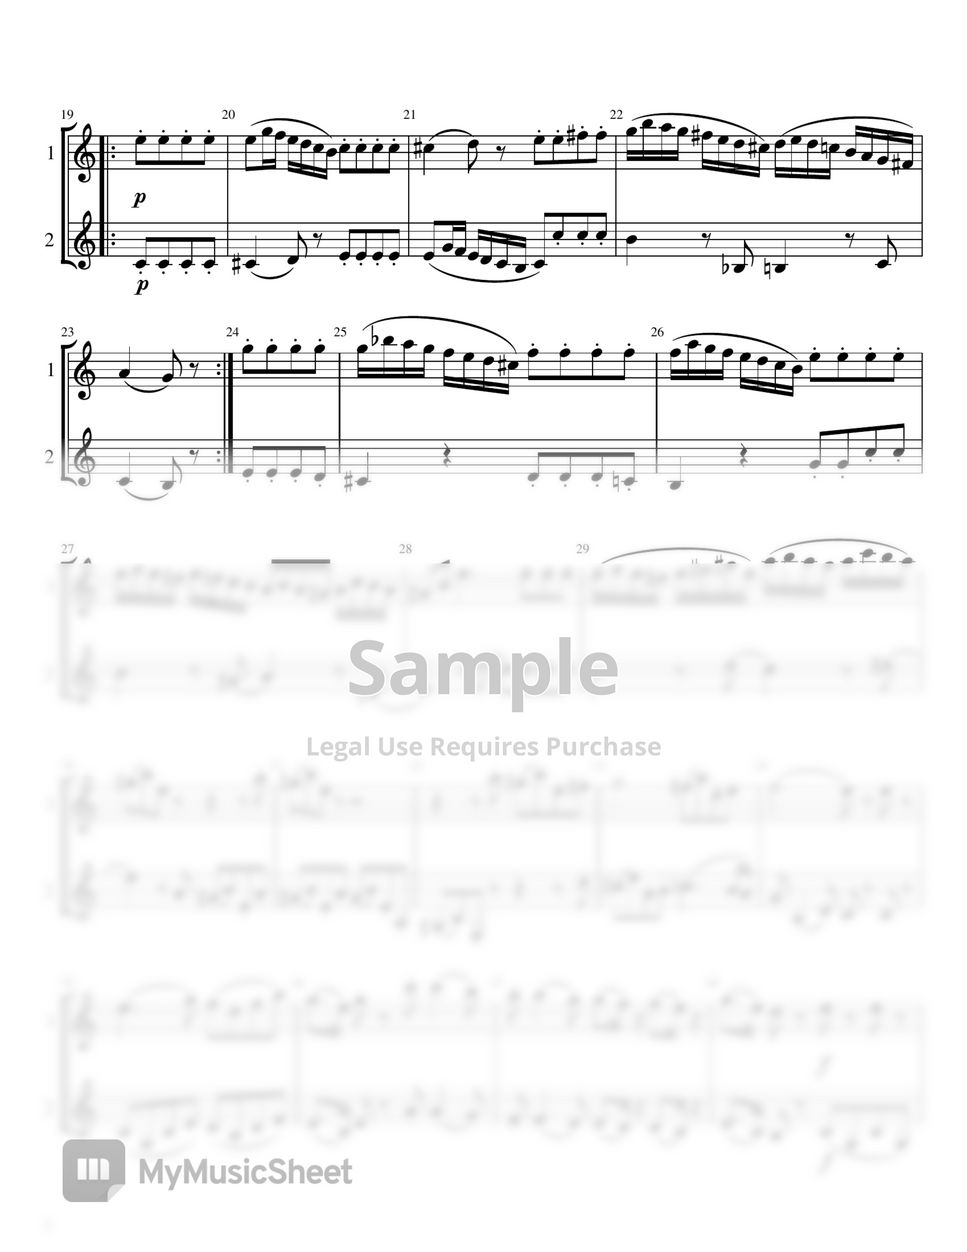 Wolfgang Amadeus Mozart - Eine kleine Nachtmusik KV 525  2nd movement (모짜르트, 아이네클라이네나흐트뮤직, 2악장, 클라리넷) by paganic